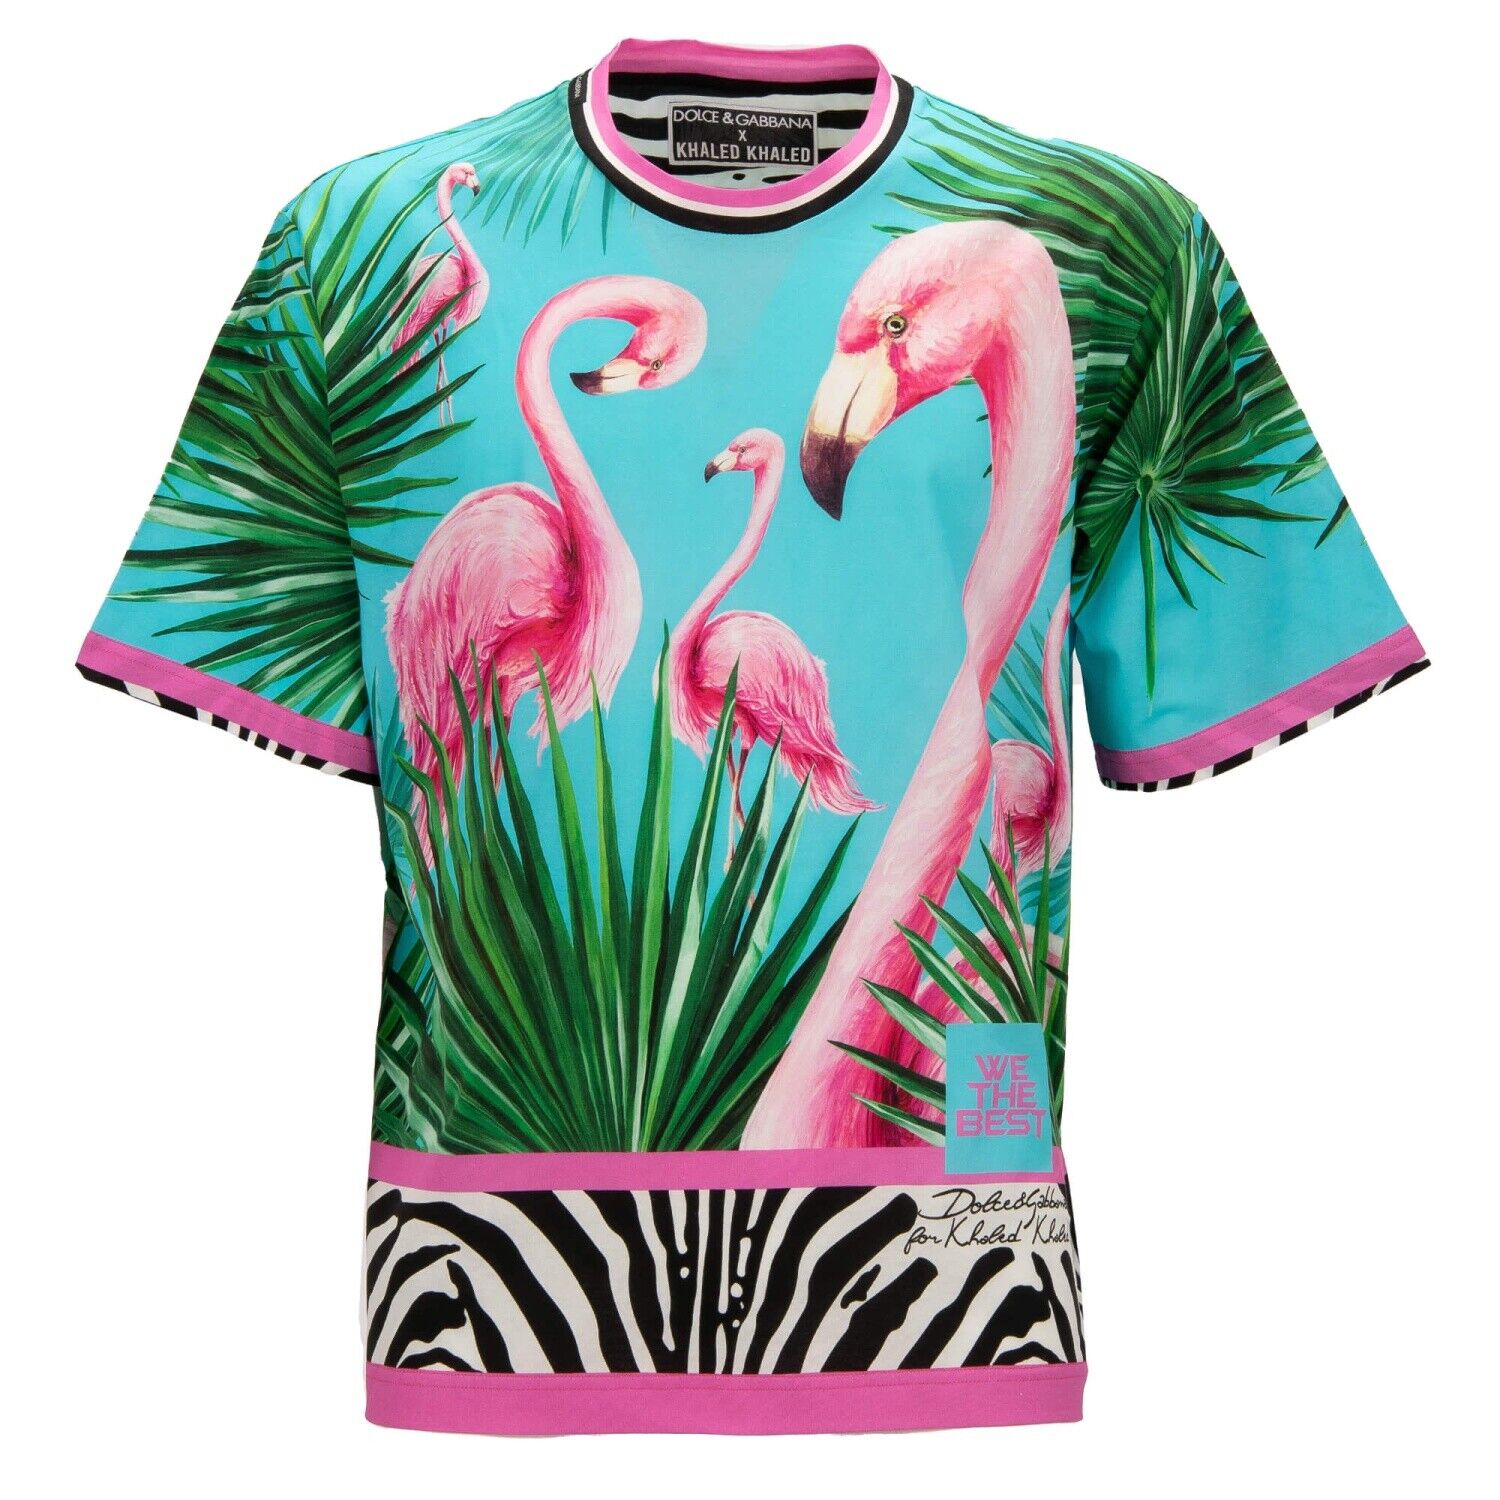 DOLCE & GABBANA x DJ KHALED Oversize T-Shirt with Flamingo Print Pink Blue 11358